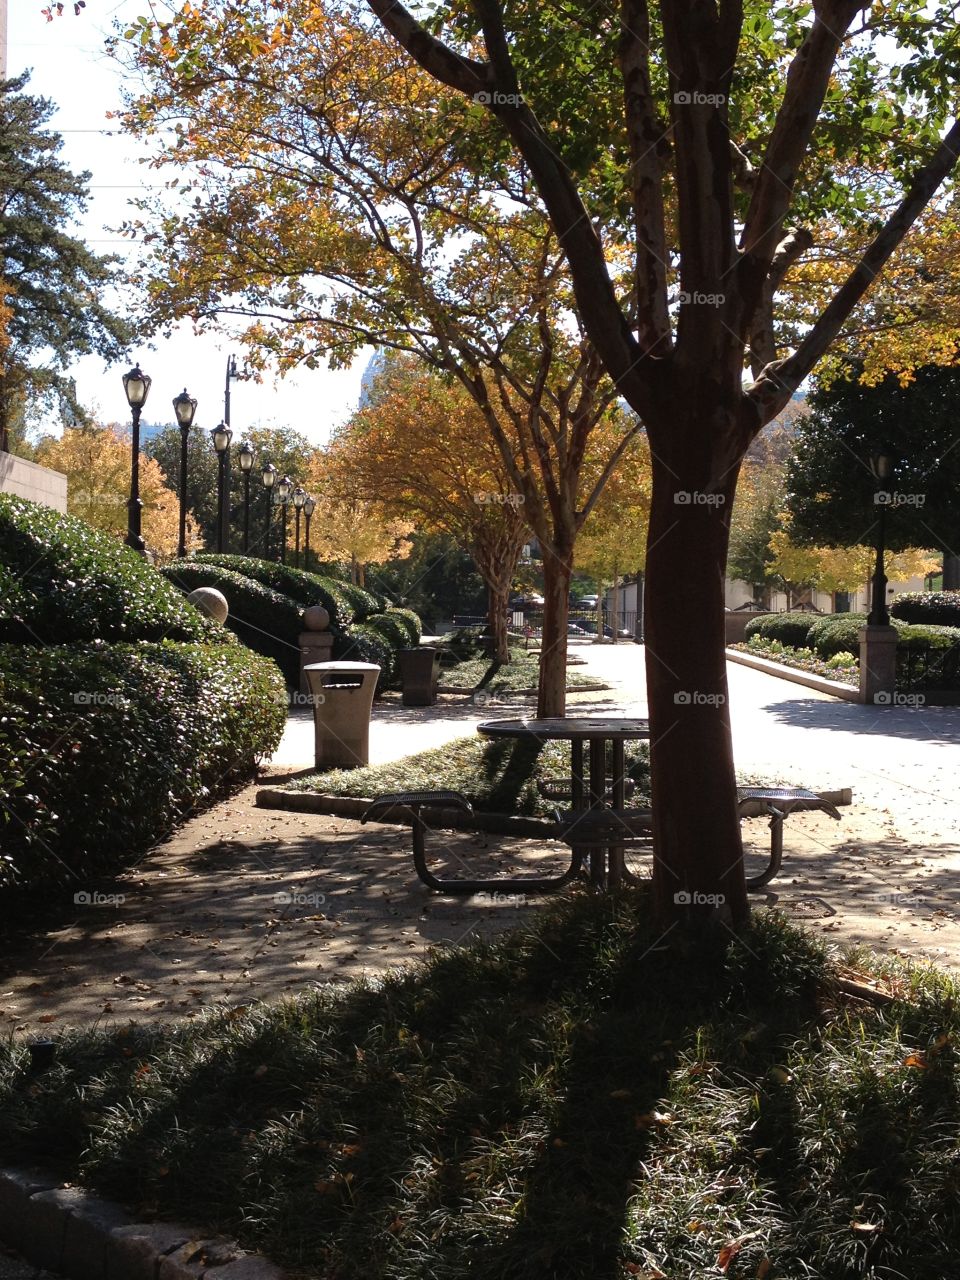 Fall day in midtown Atlanta in the park 